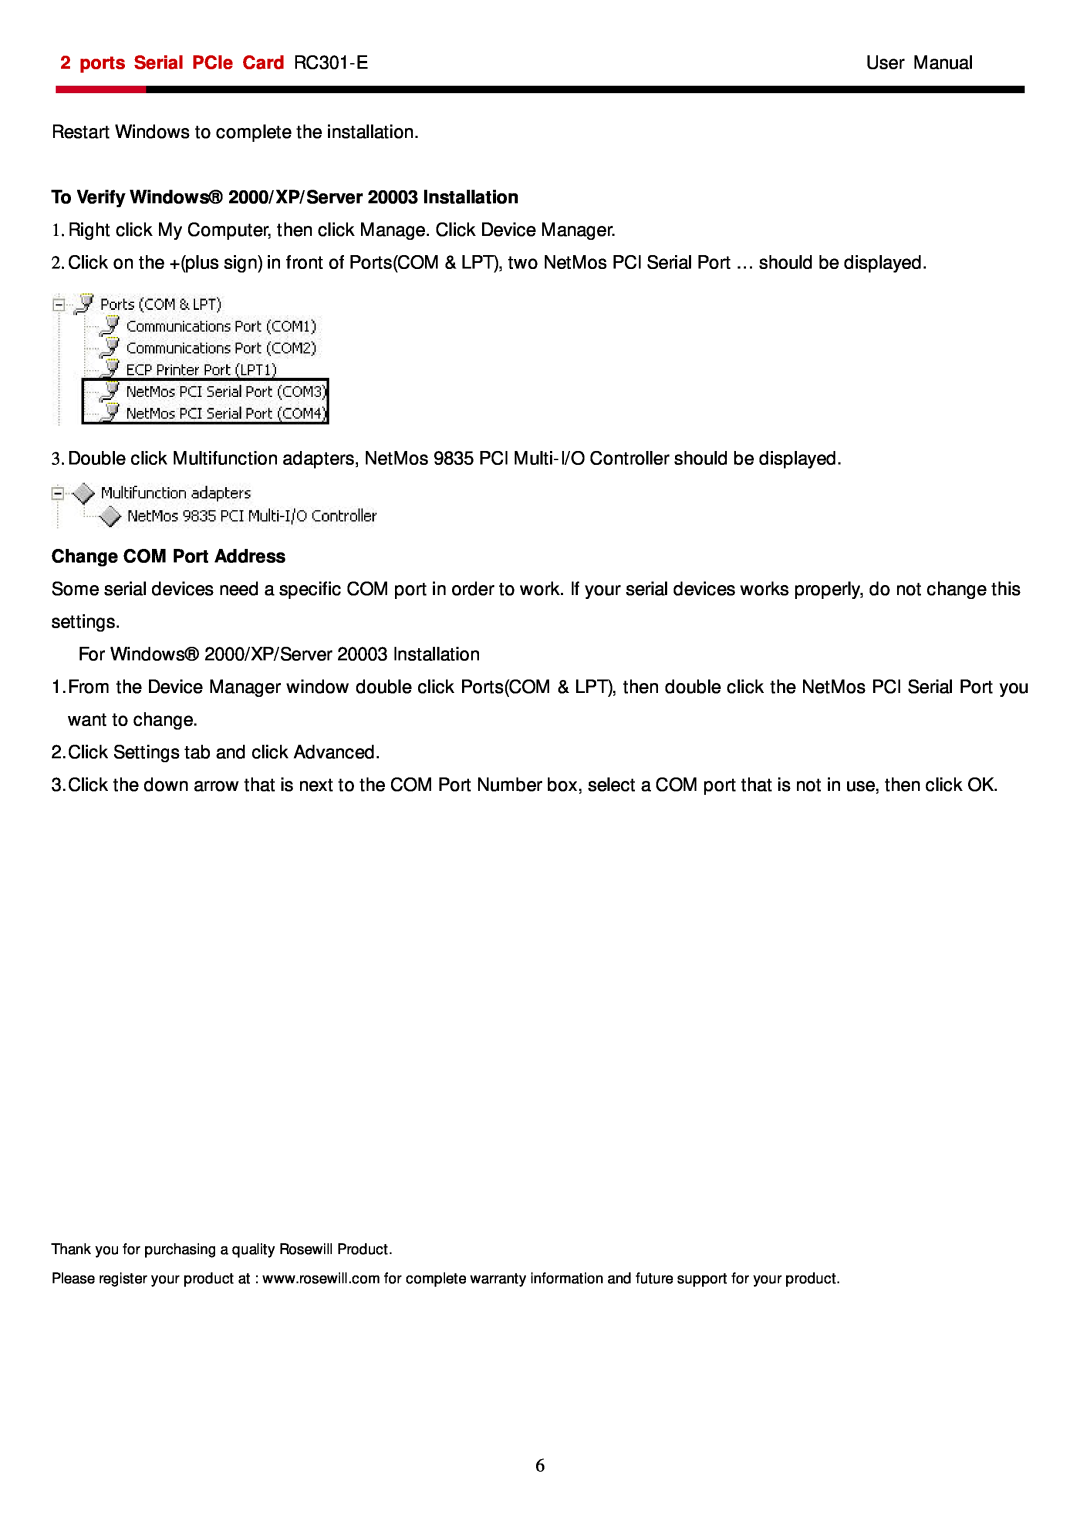 Rosewill RC-301E user manual To Verify Windows 2000/XP/Server 20003 Installation, Change COM Port Address 